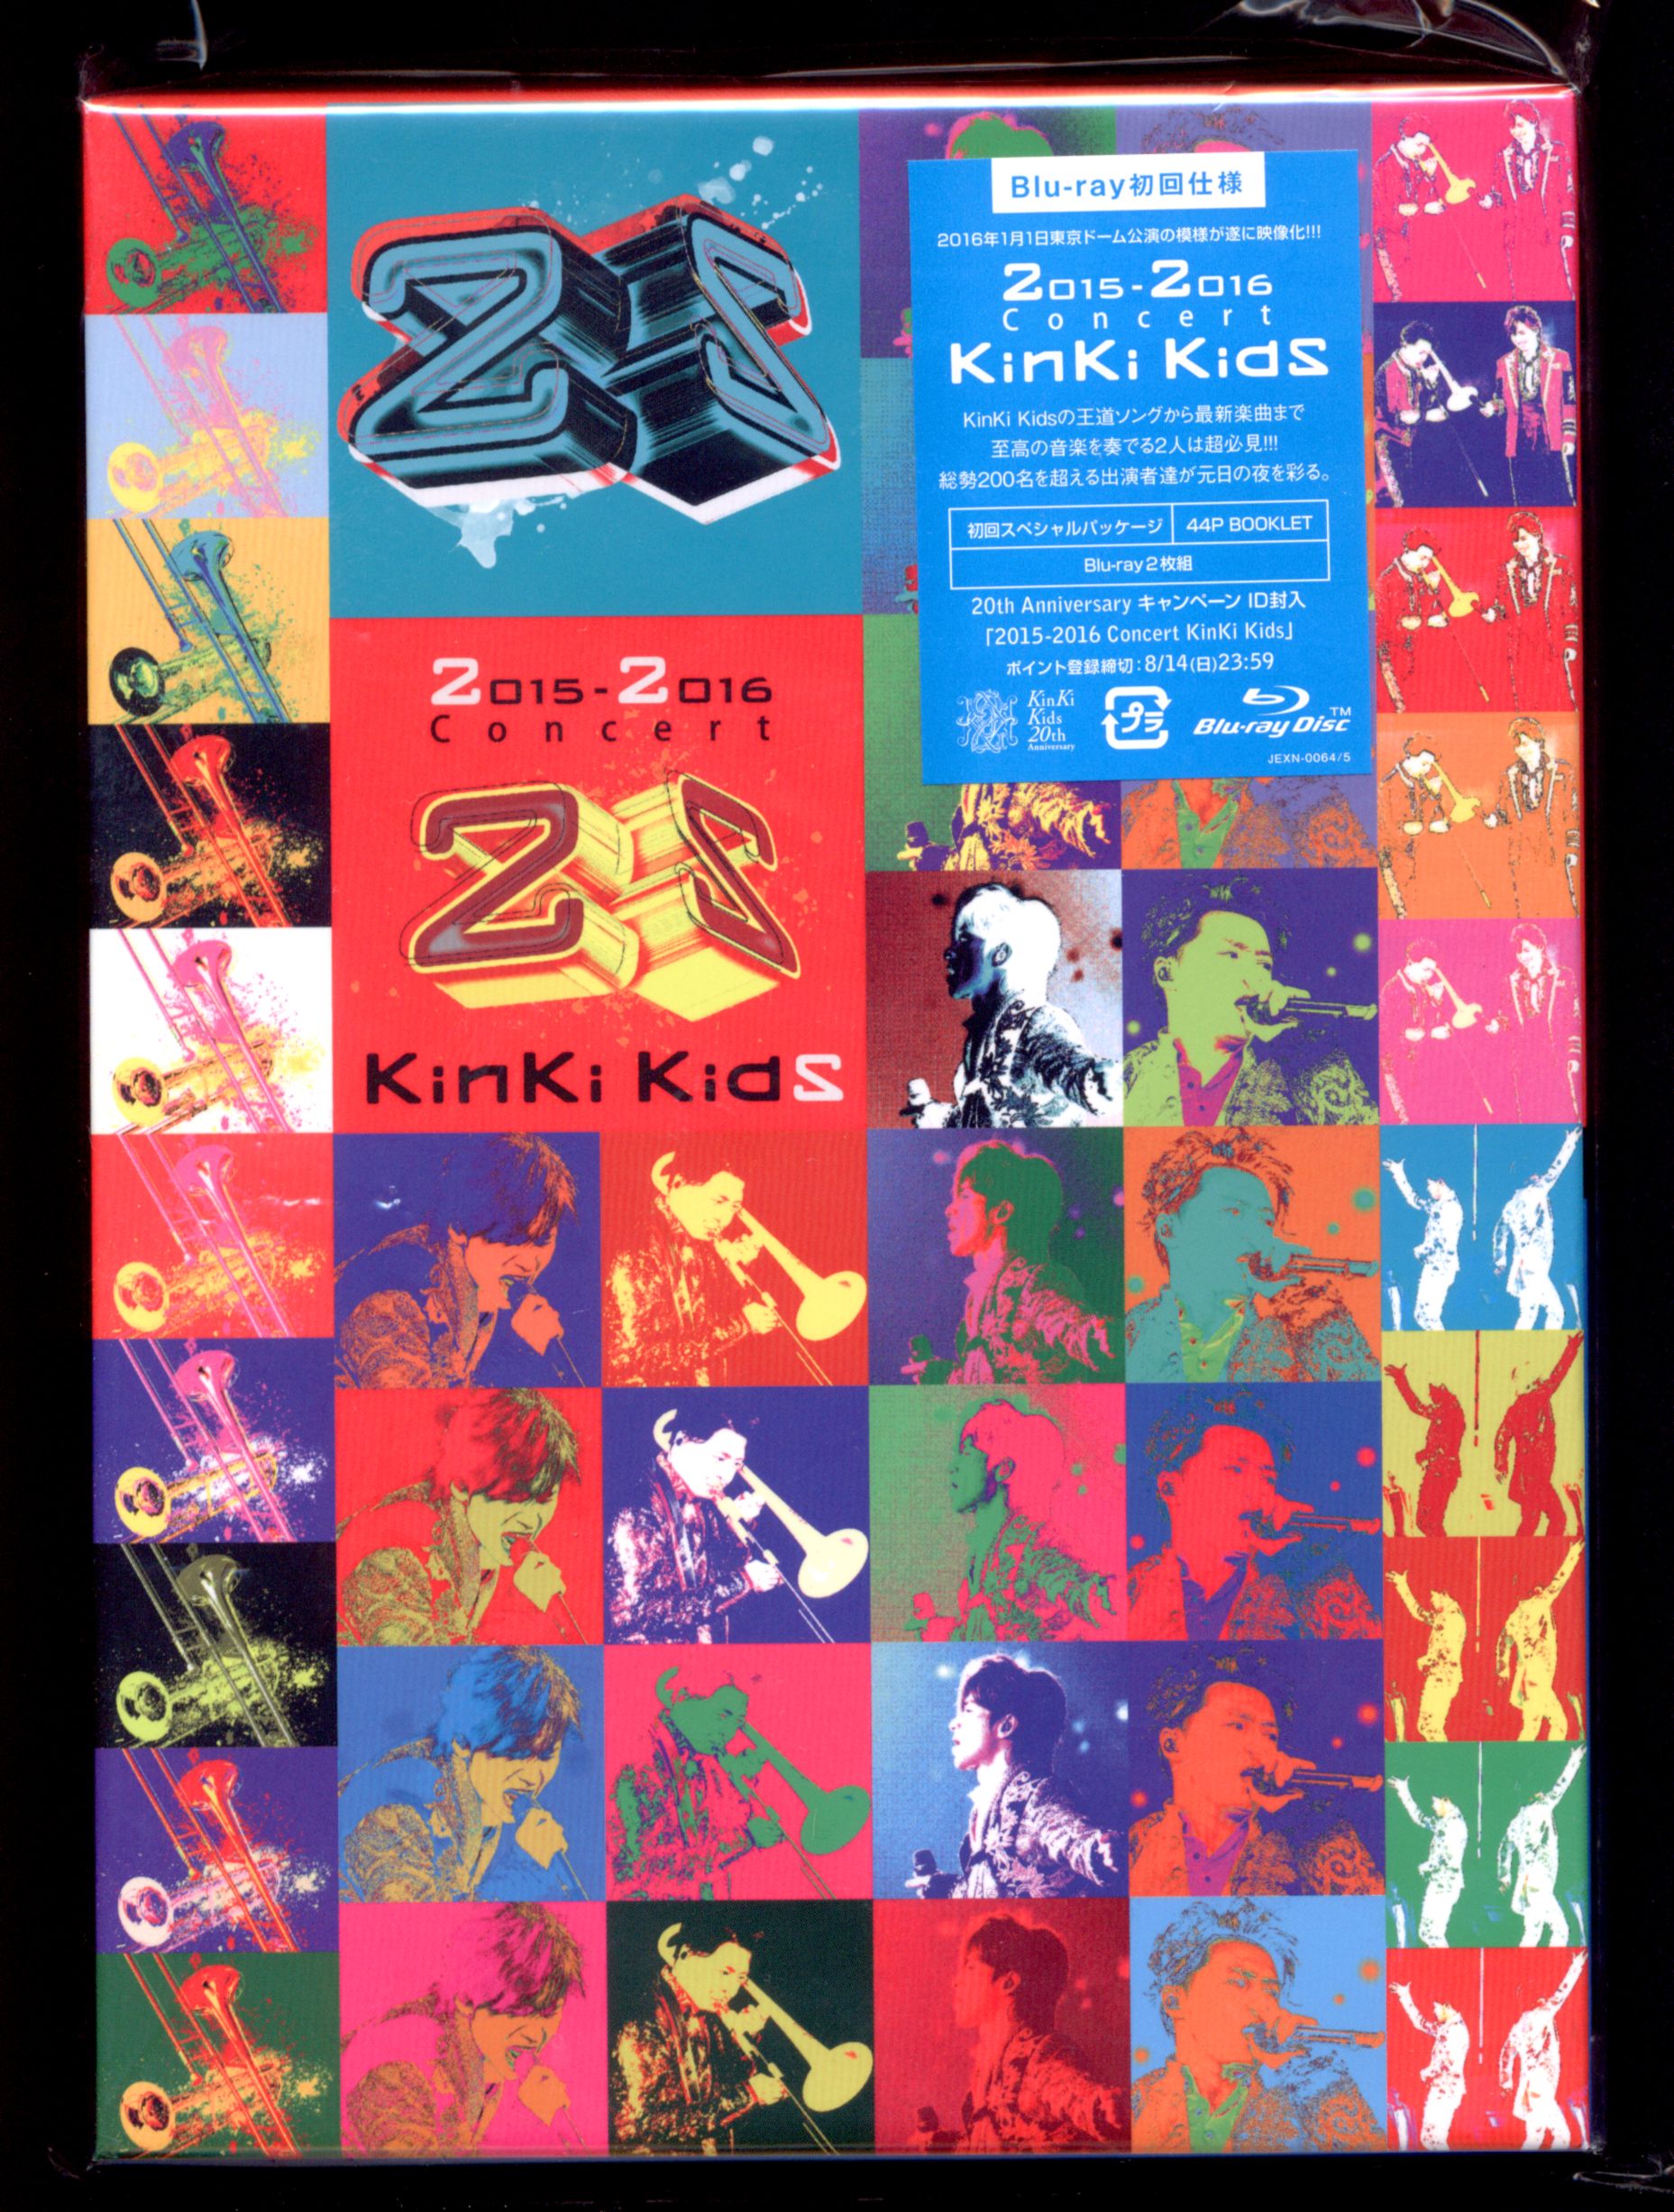 KinKi Kids 2015-2016 Concert Blu-ray First Edition Limited Ed Disc *2BD